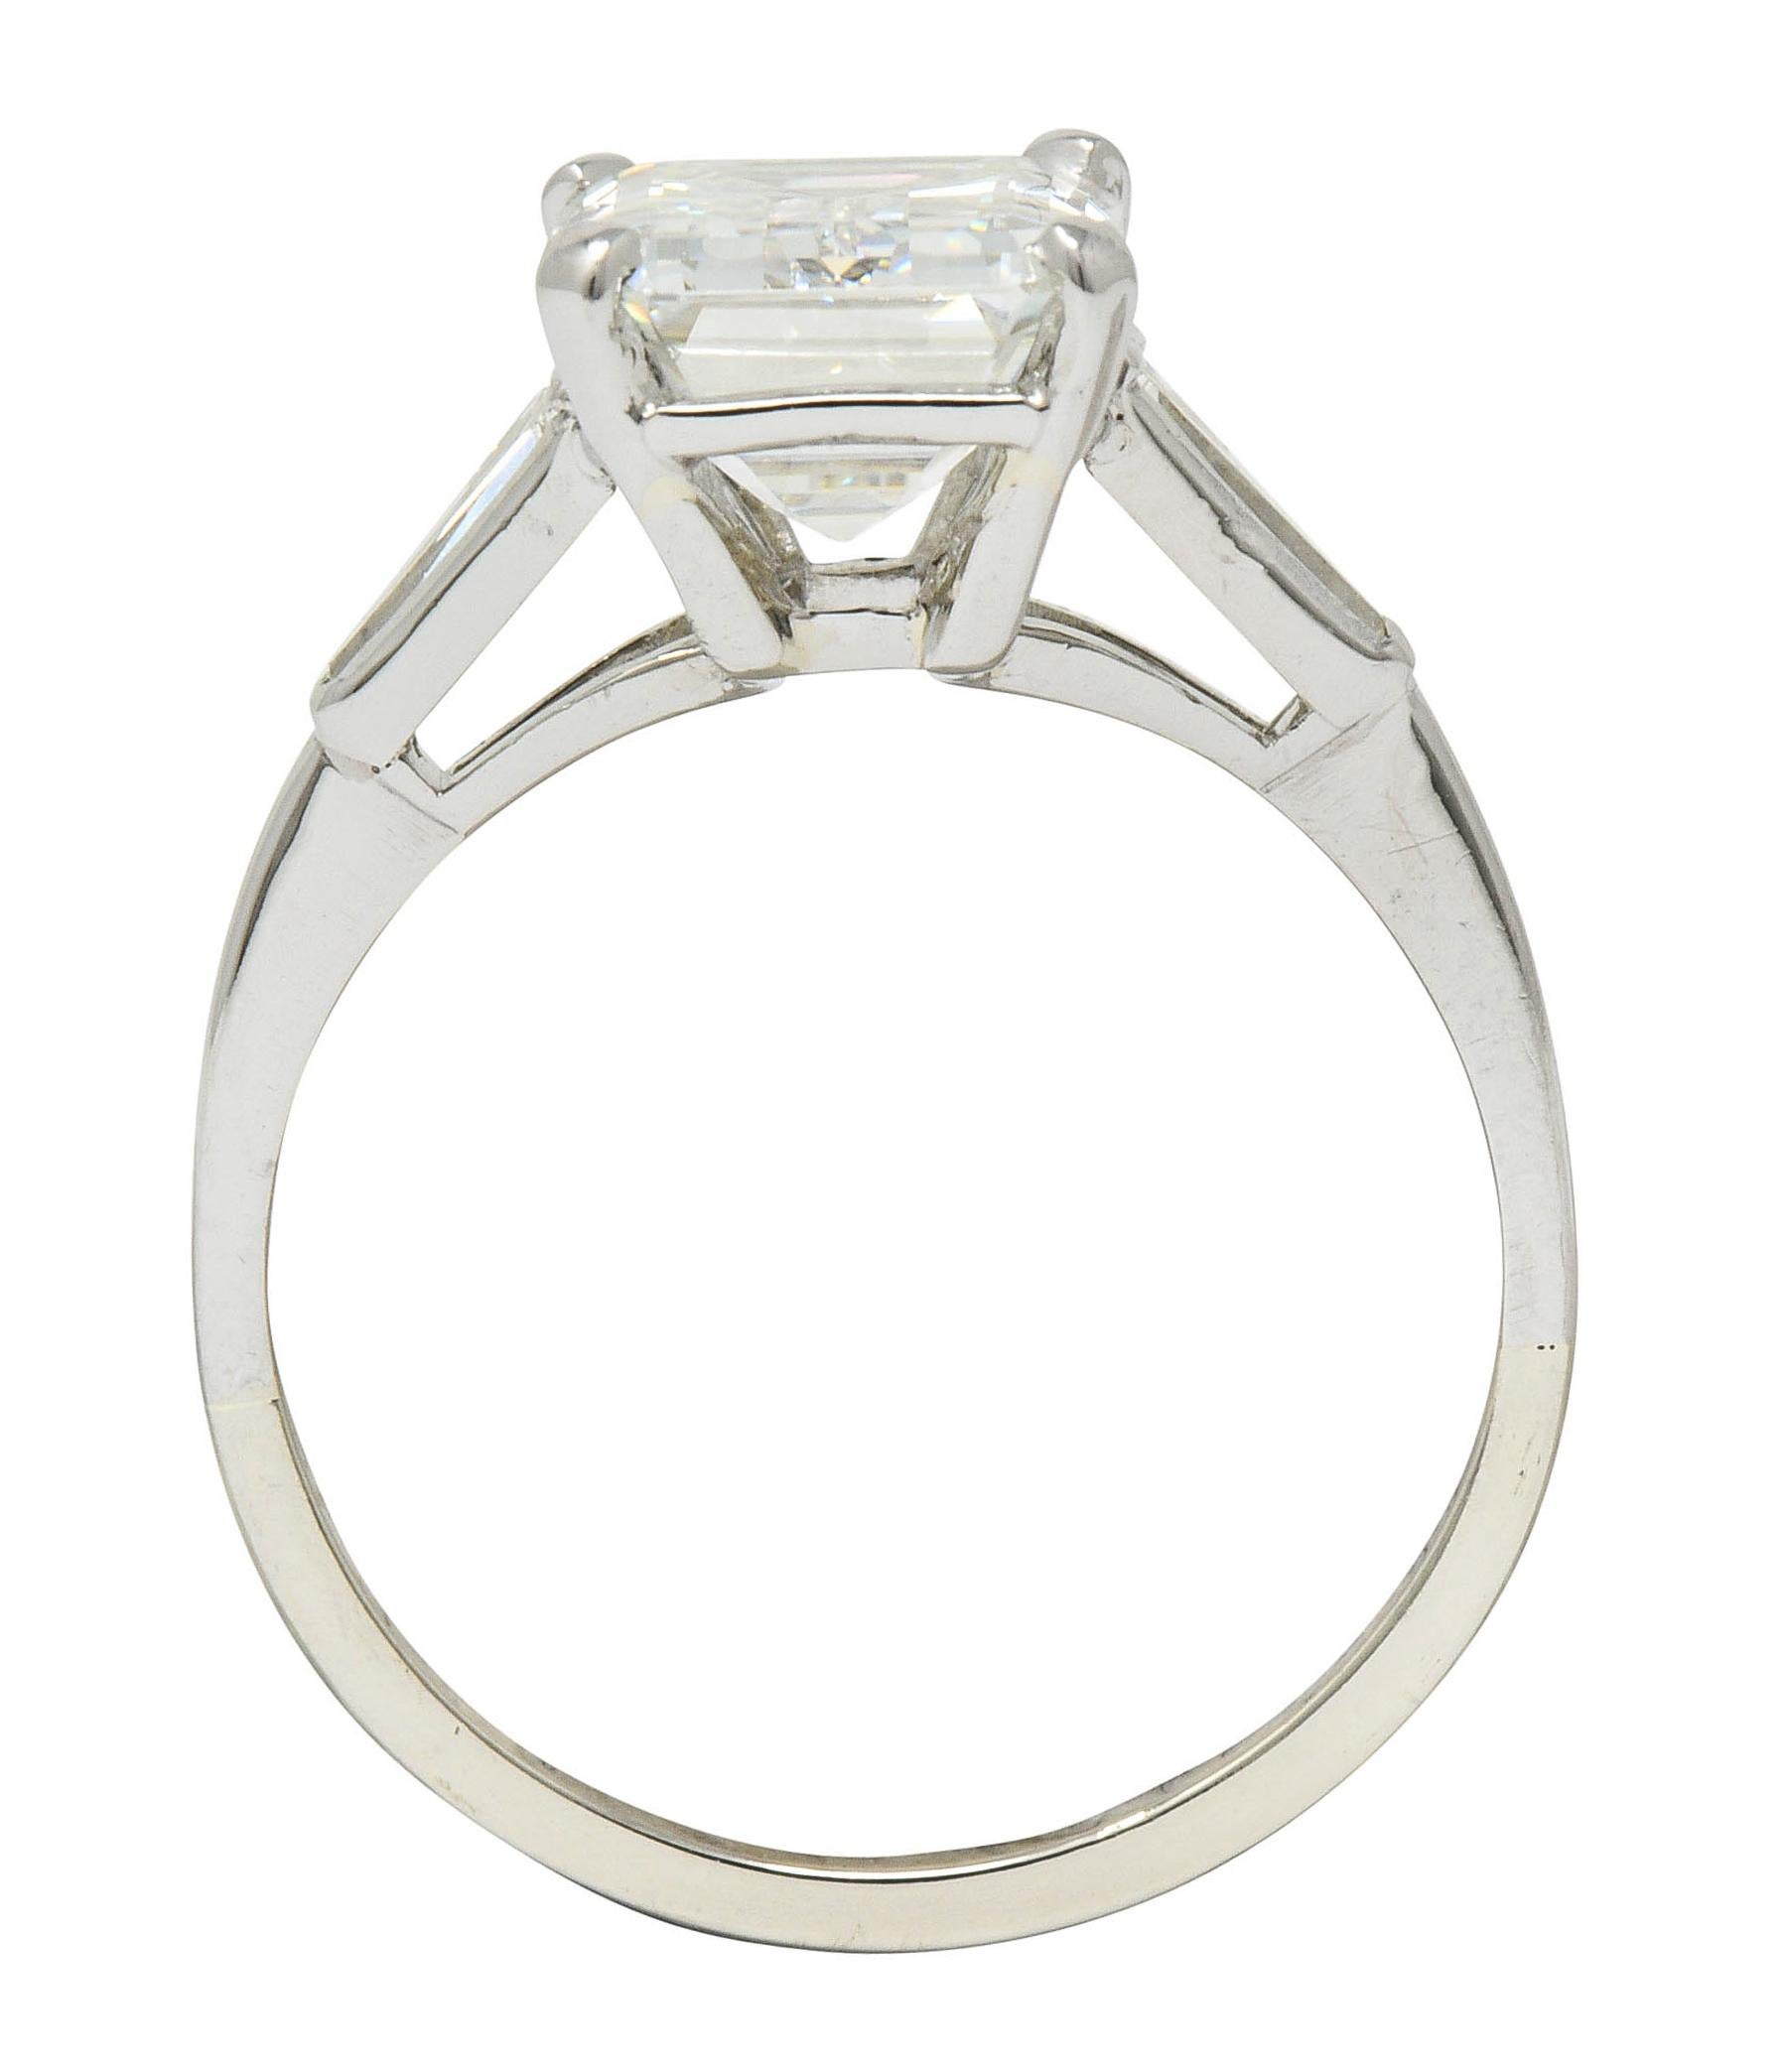 Substantial 4.58 Carat Emerald Cut Diamond Platinum Engagement Ring GIA 2